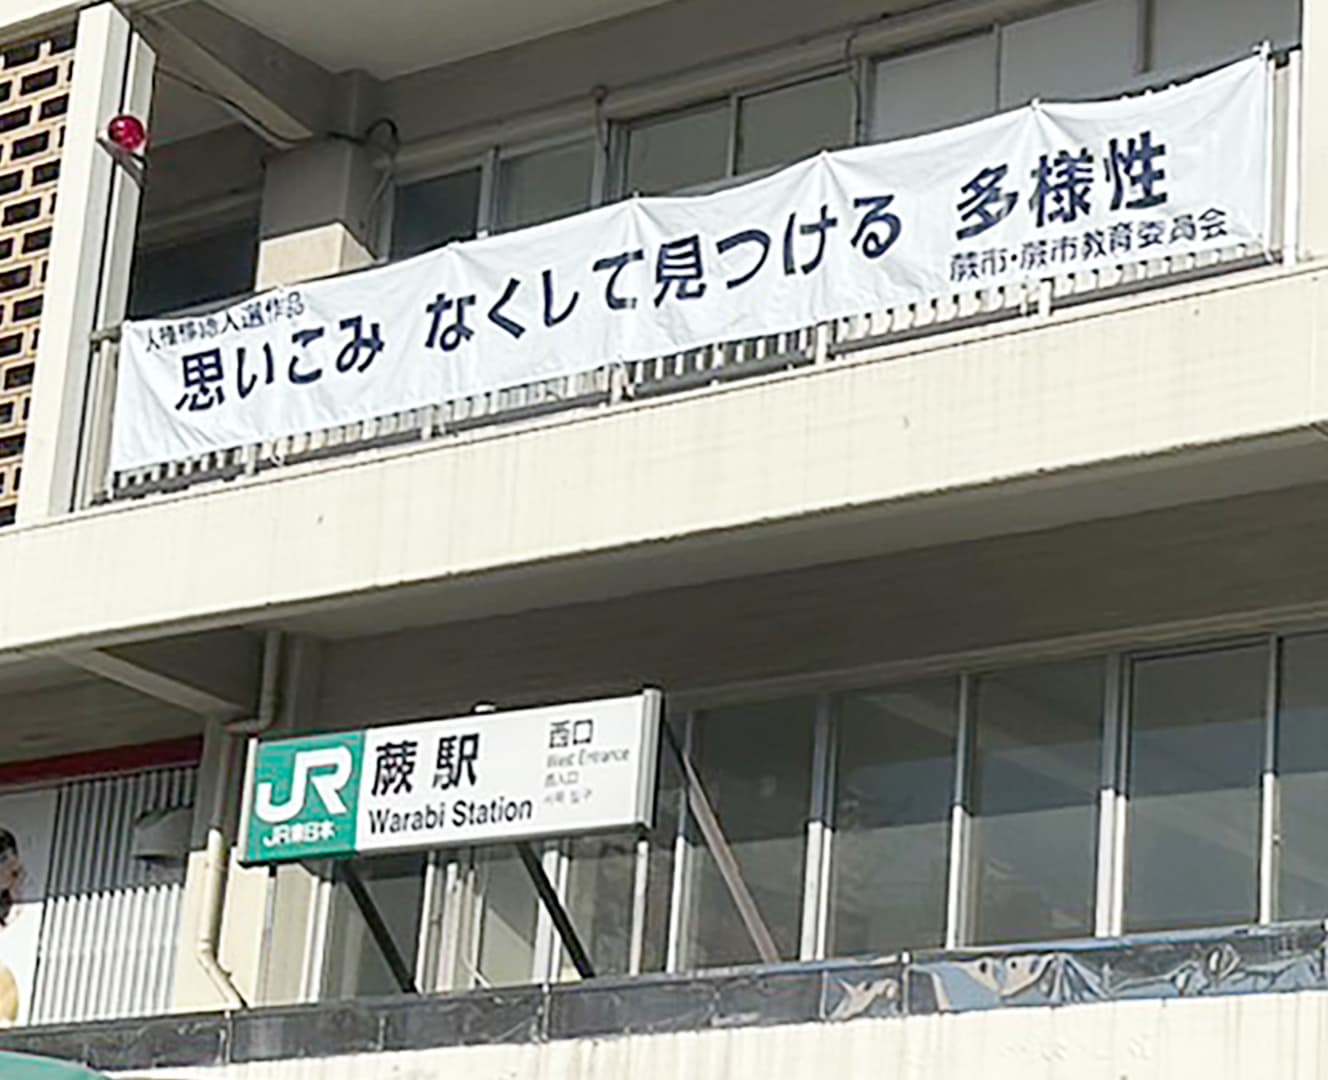 JR蕨駅には、人権標語の入選作品が掲げられていた。駅周辺には多国籍な飲食店が集まっている